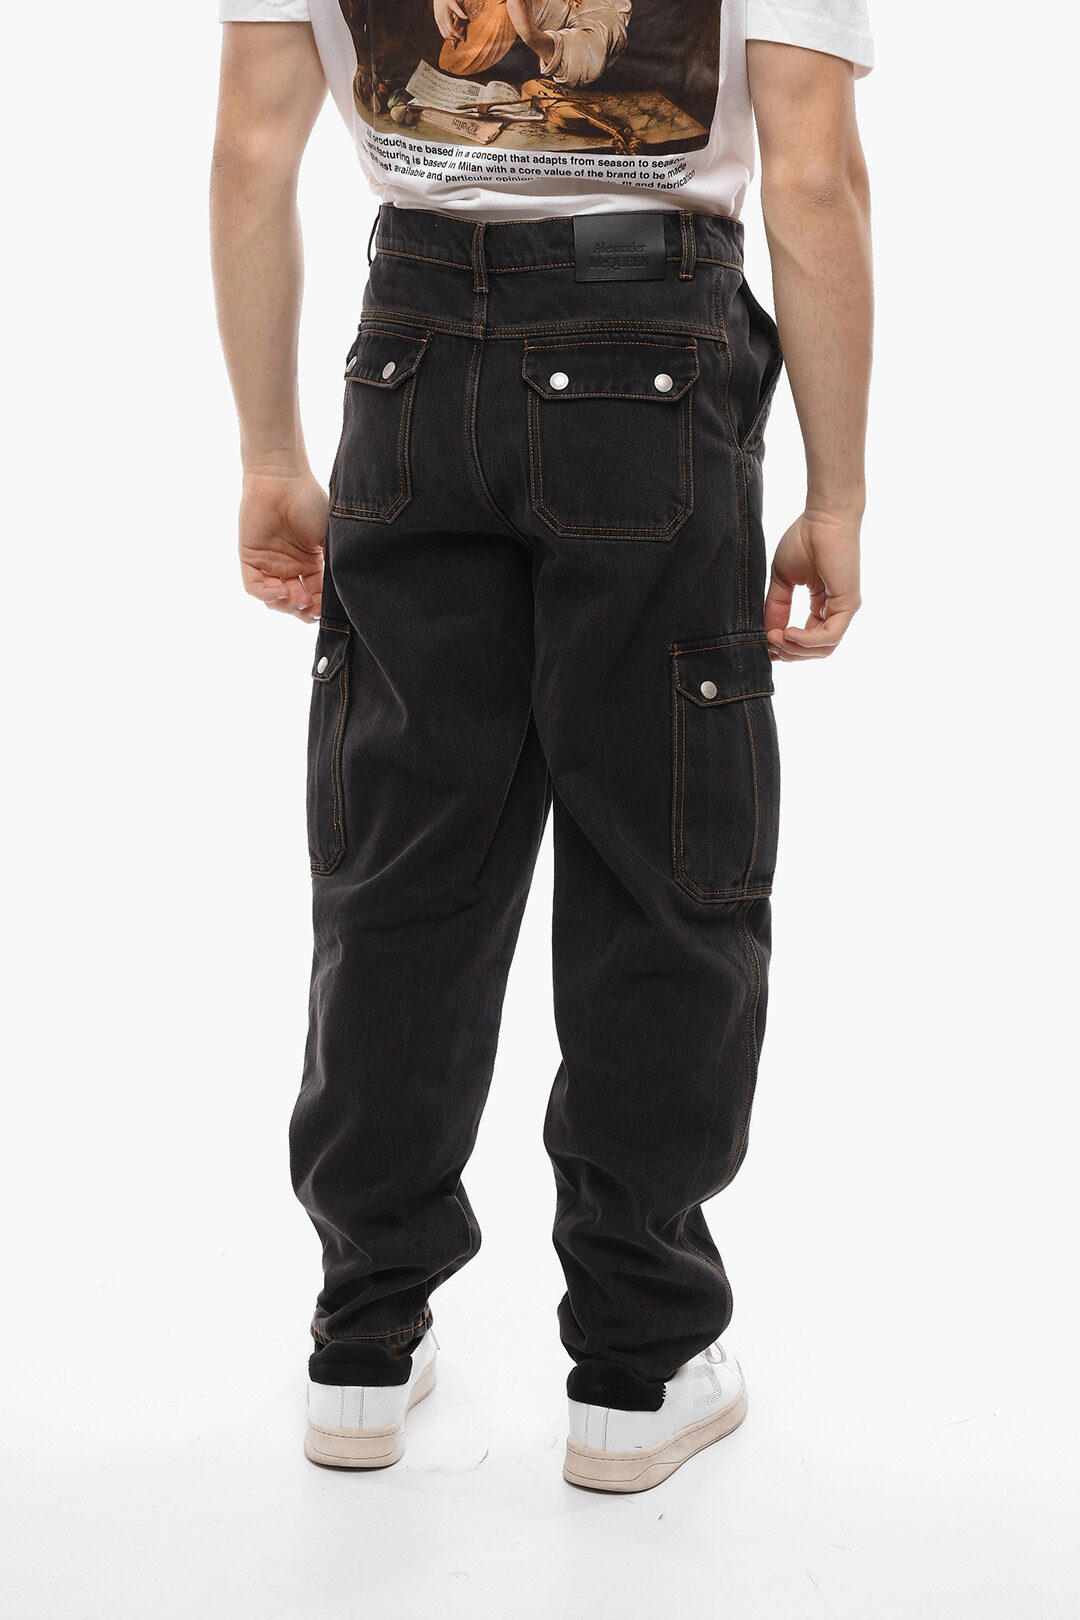 J Brand | Pants & Jumpsuits | J Brand Distressed Caledon Houlihan Cargo  Pants | Poshmark